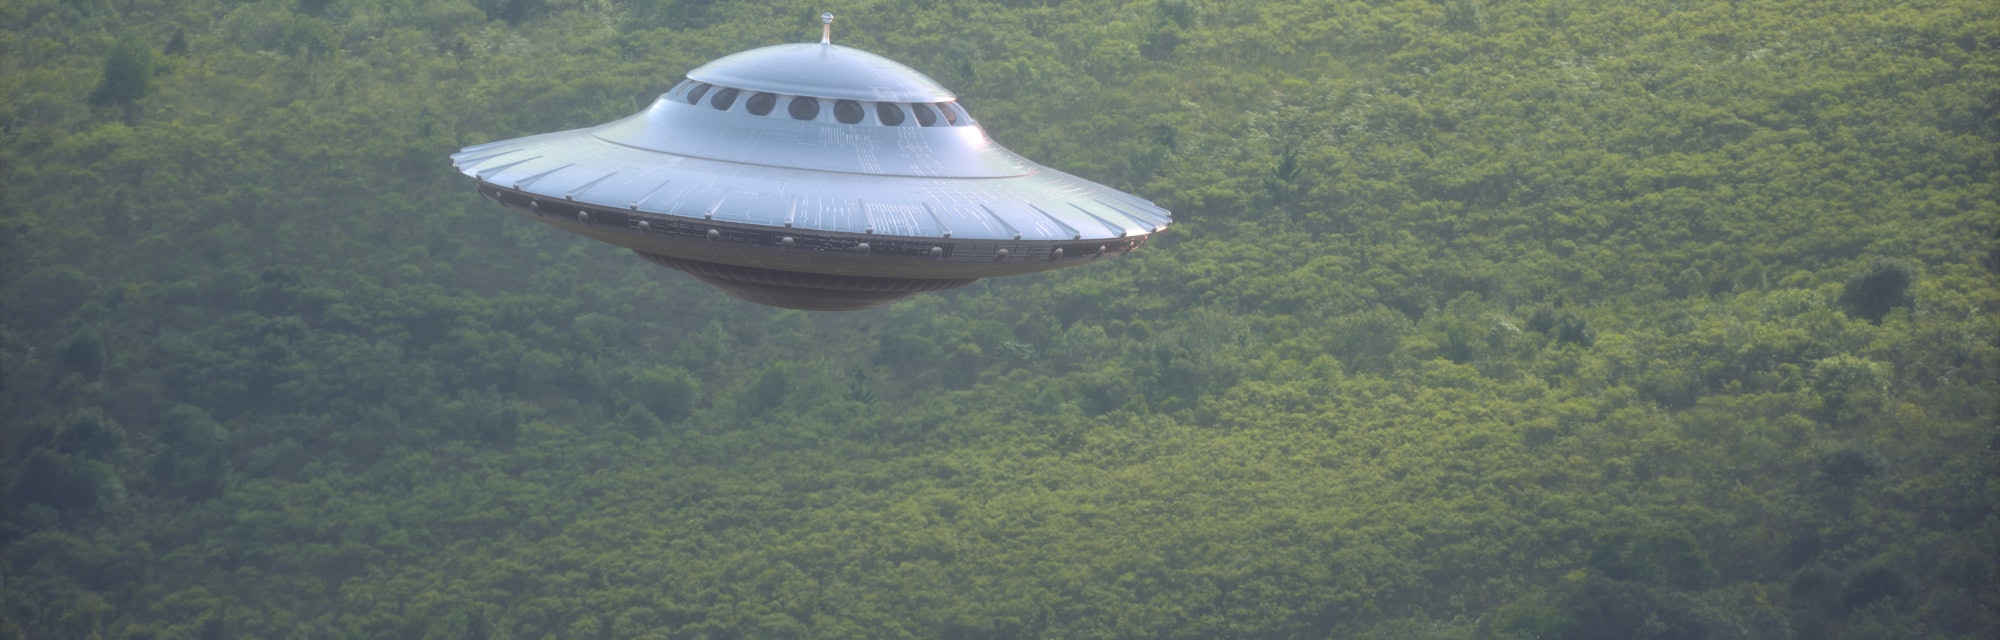 Unidentified flying object (UFO), illustration.